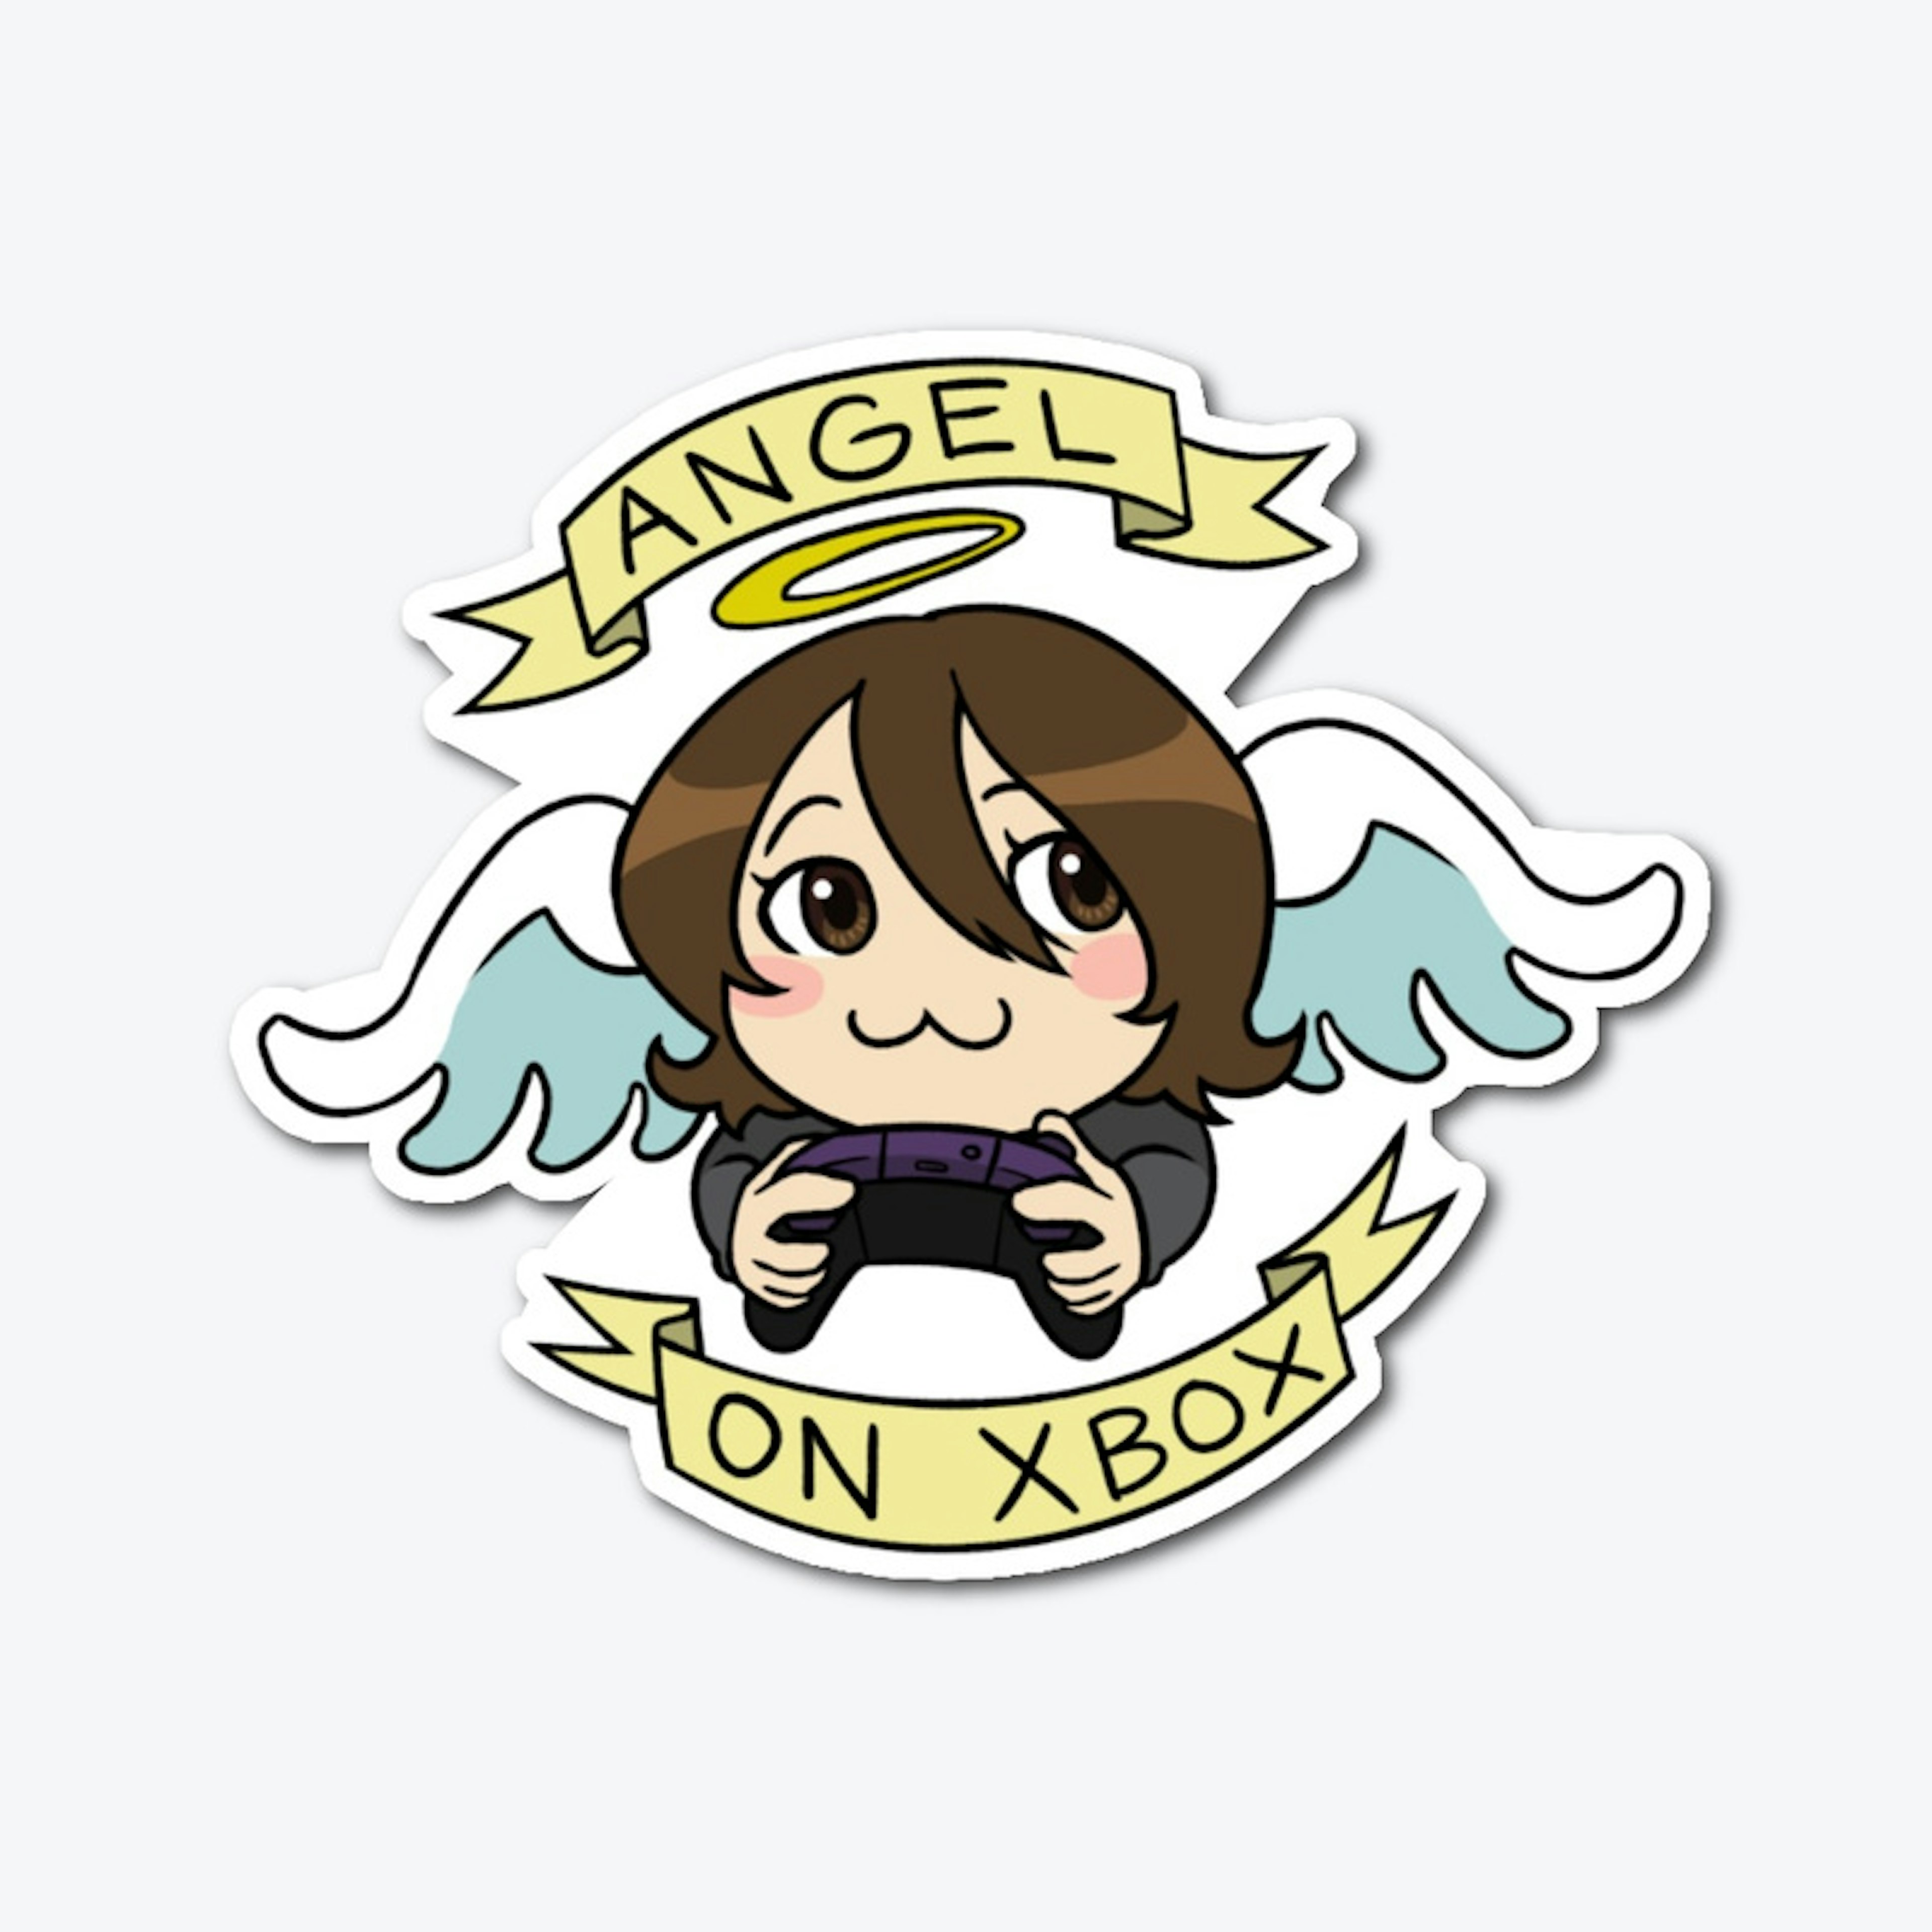 Angel on Xbox